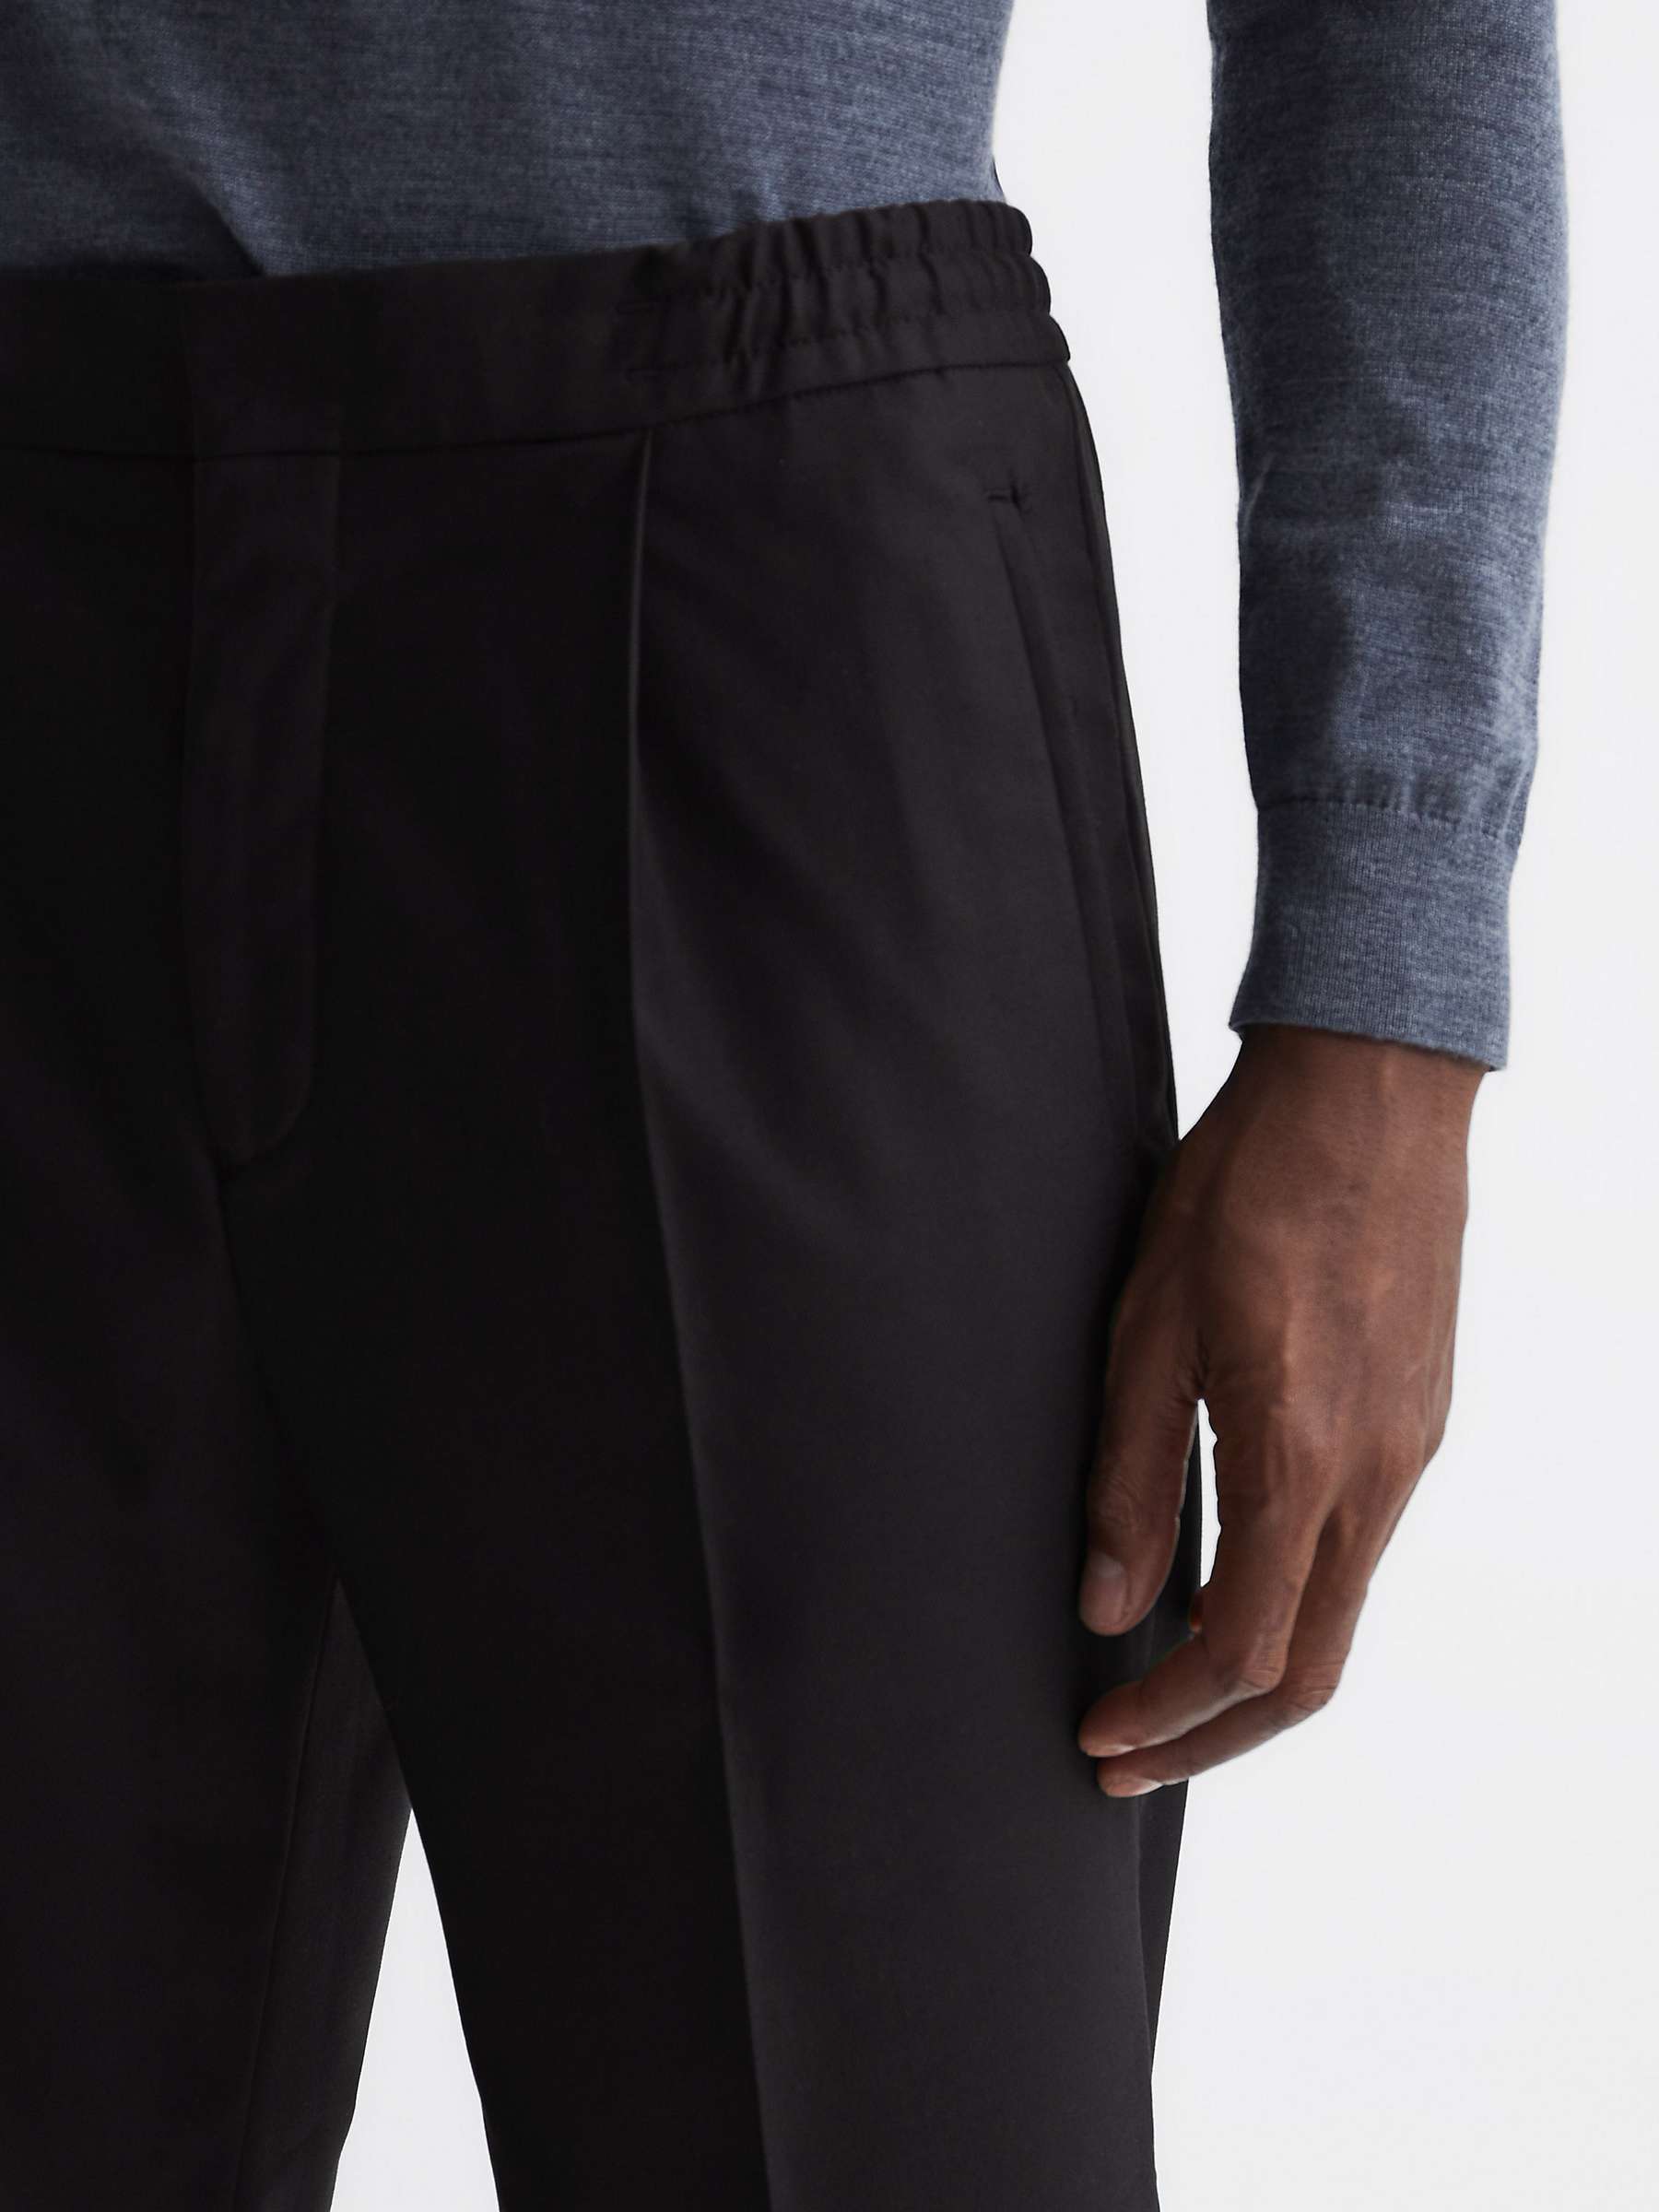 Reiss Brighton Pleated Slim Trousers, Black at John Lewis & Partners